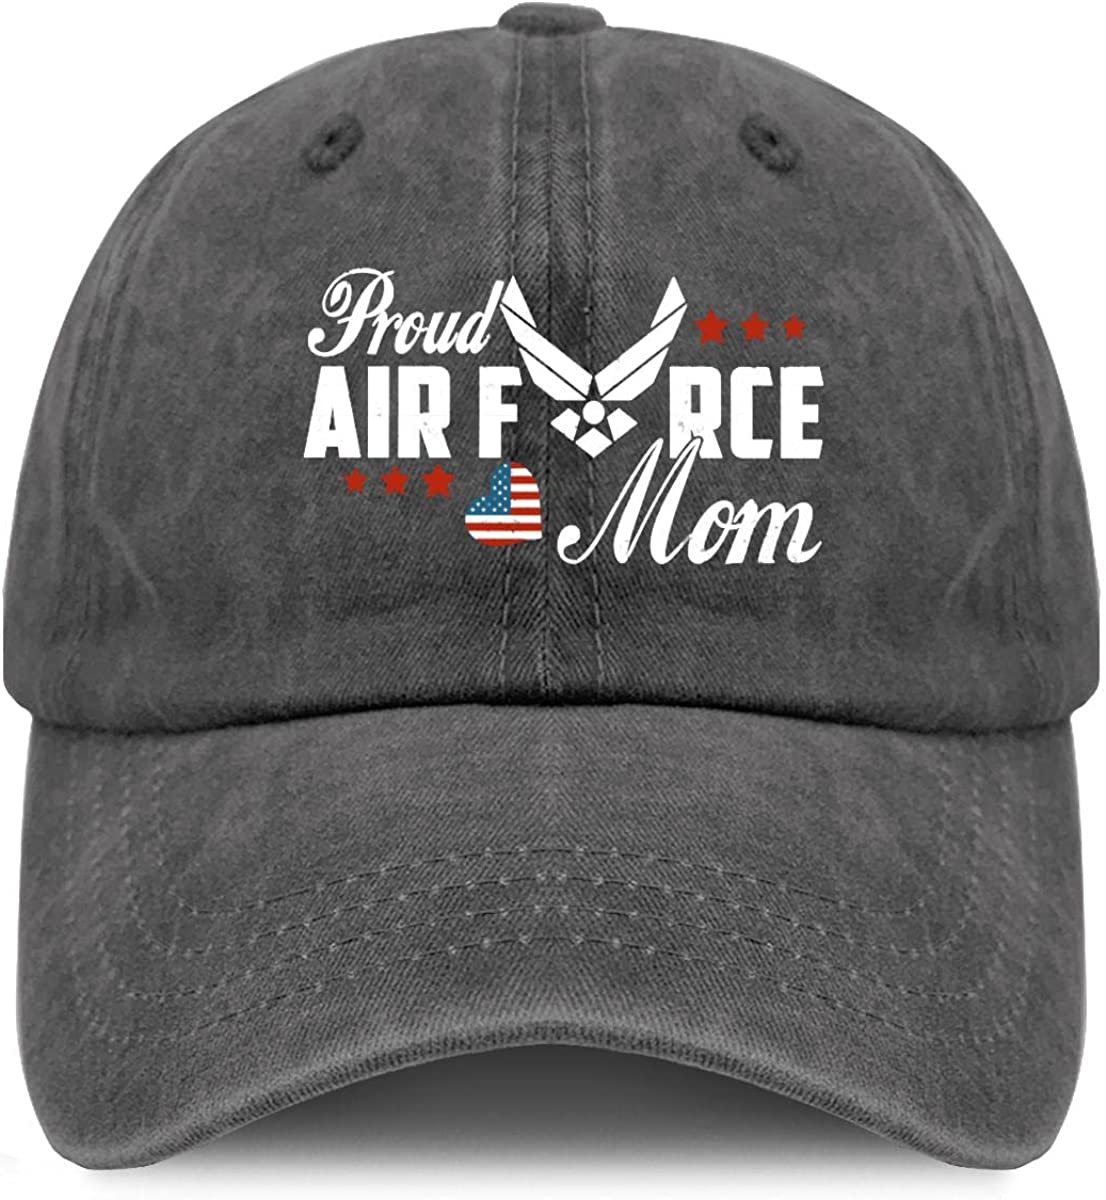 Baseball Cap for Men Fashion Caps Mens Flexfit Proud Mom Air Force Dad Caps Cotton for Fishing Pigment Black